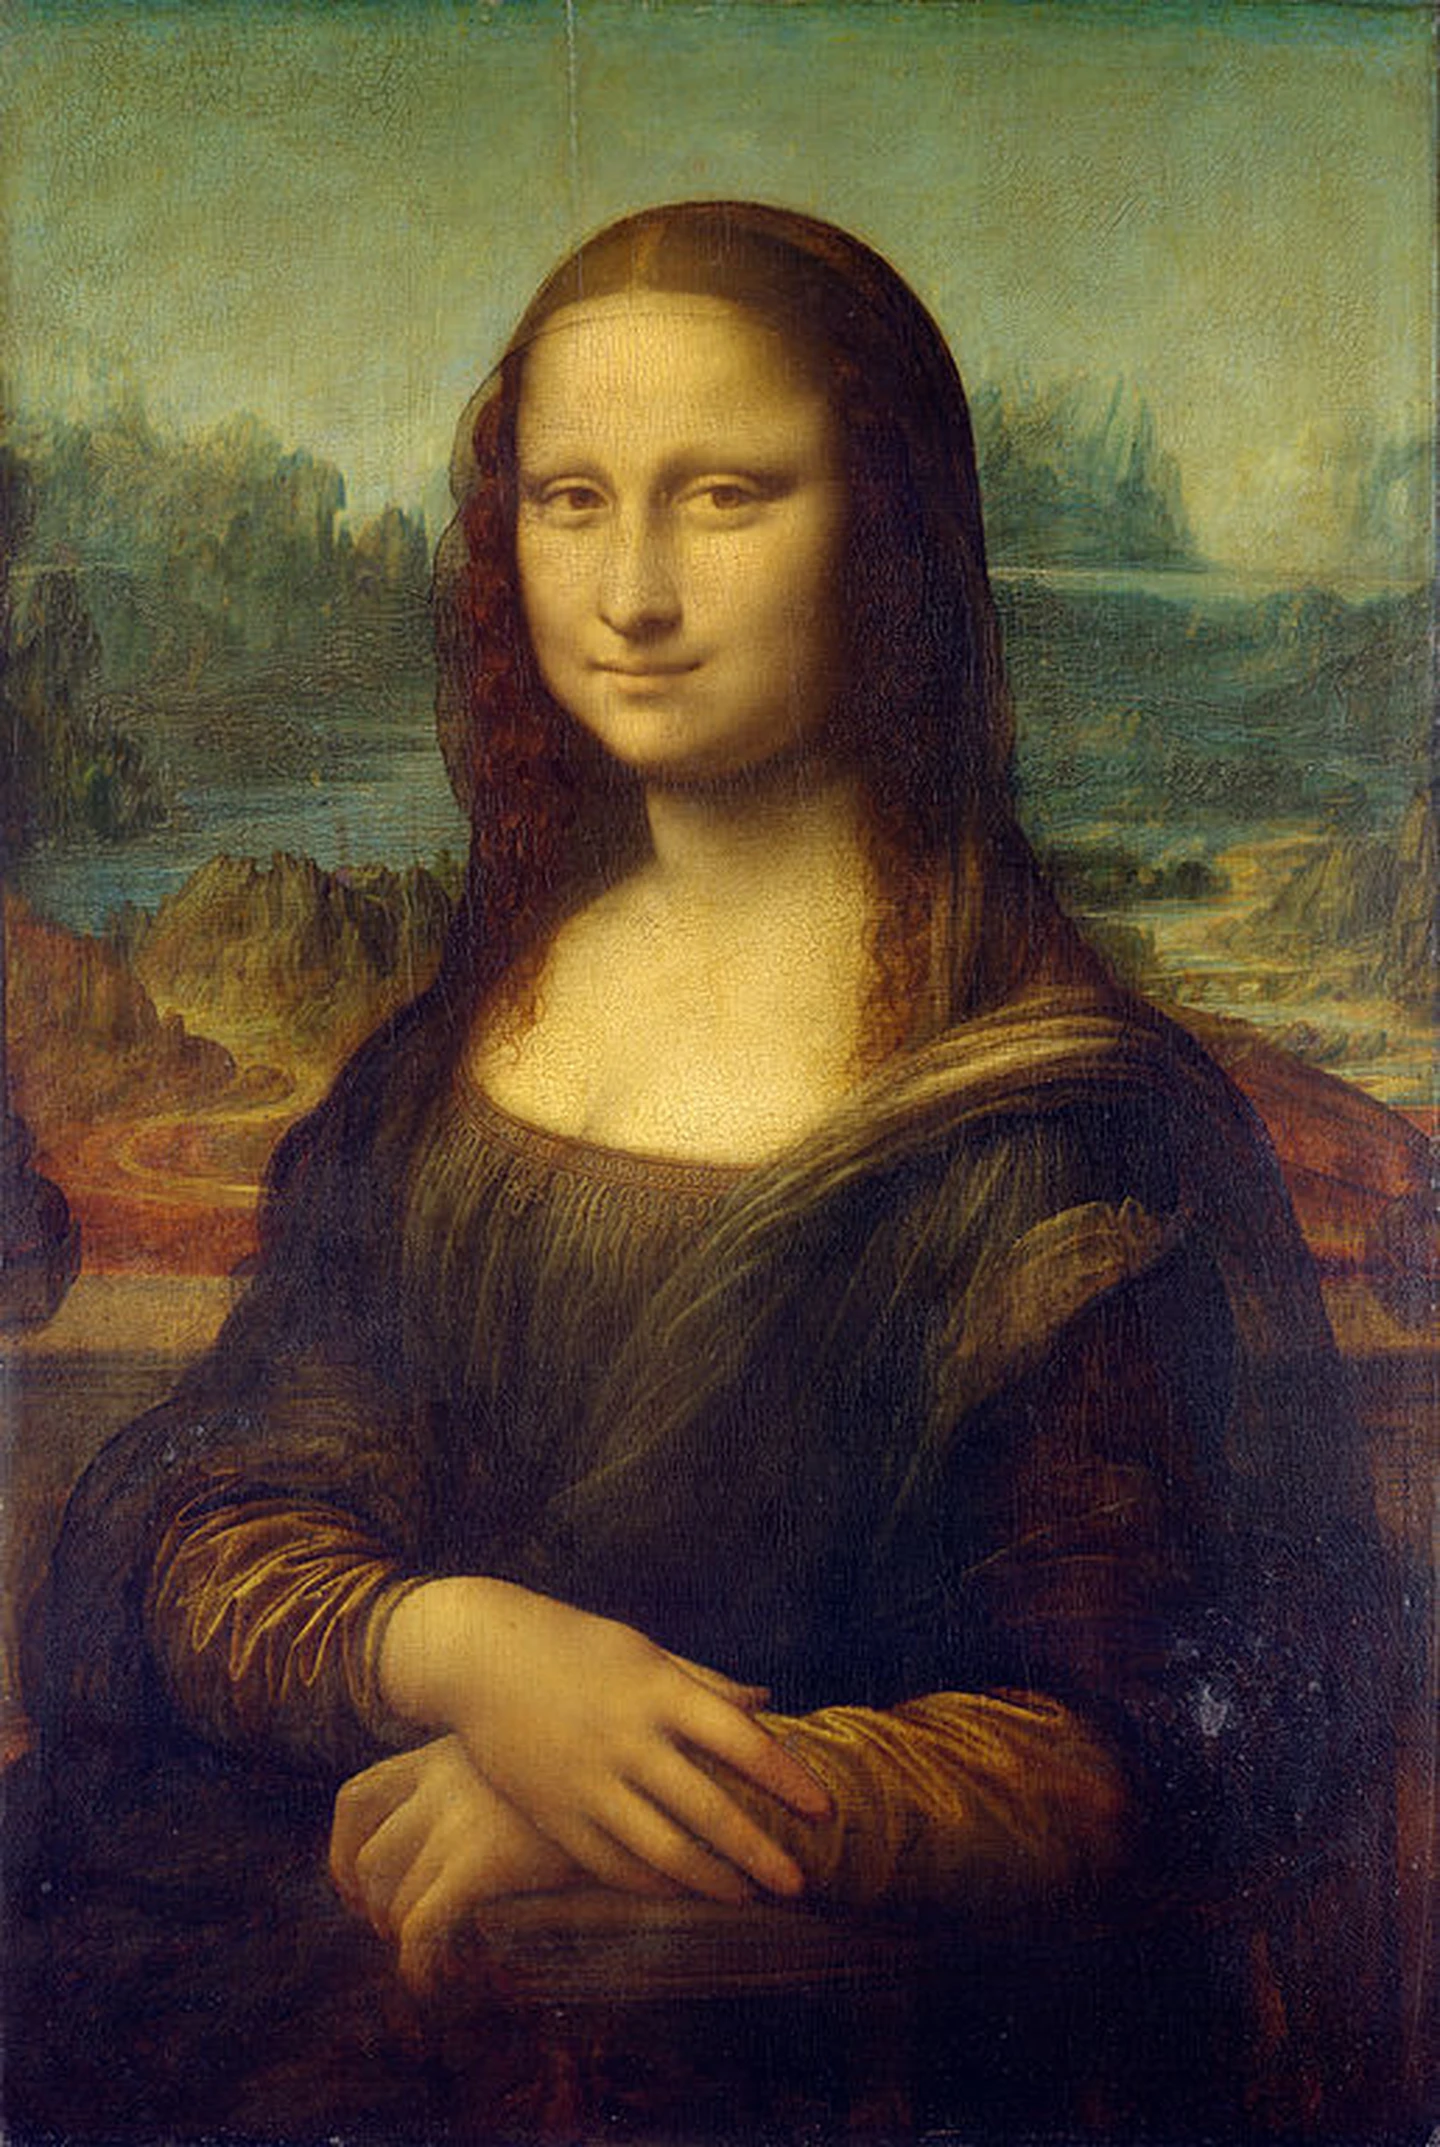 Mona Lisa by Leonardo da Vinci | Photo from theculturetrip.com | https://img.theculturetrip.com/1440x/smart/wp-content/uploads/2016/07/mona_lisa_by_leonardo_da_vinci_from_c2rmf_retouched1.jpg